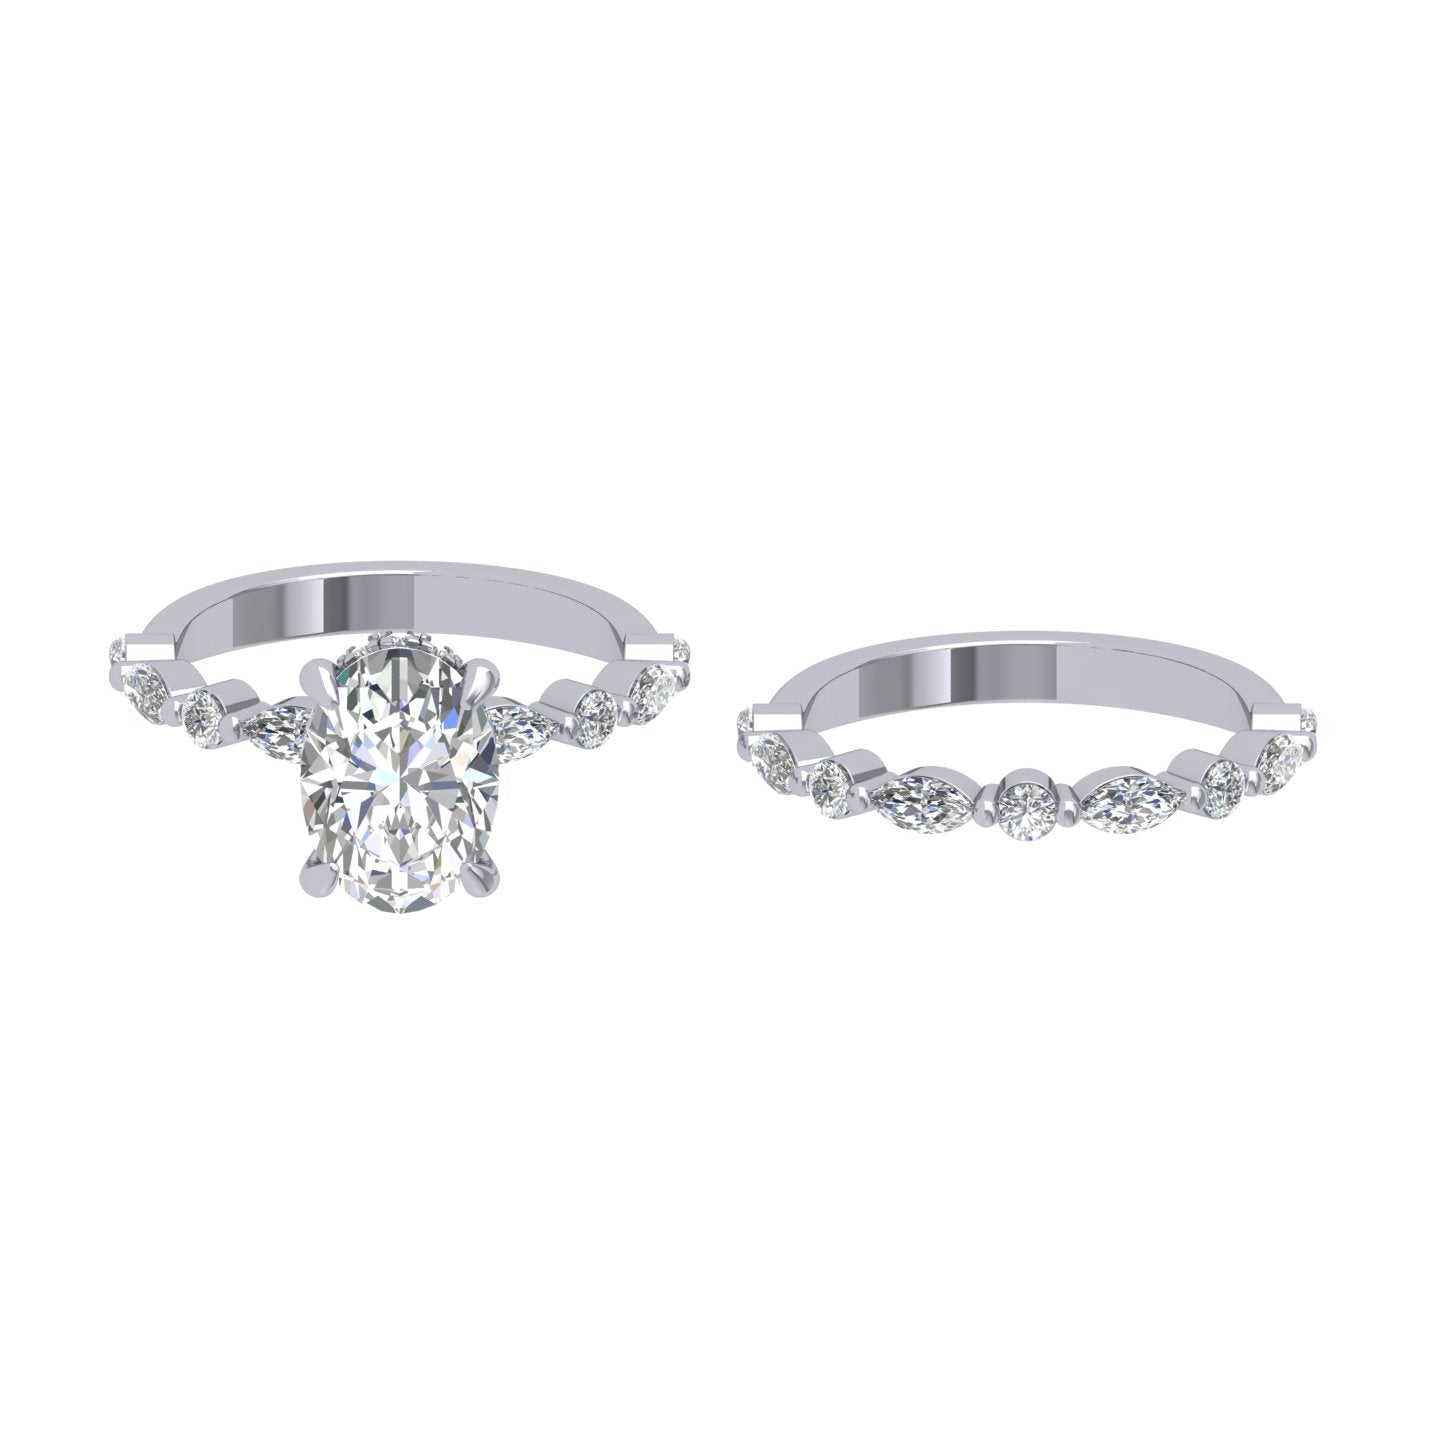 Oval Hidden Halo Diamond Engagement Ring